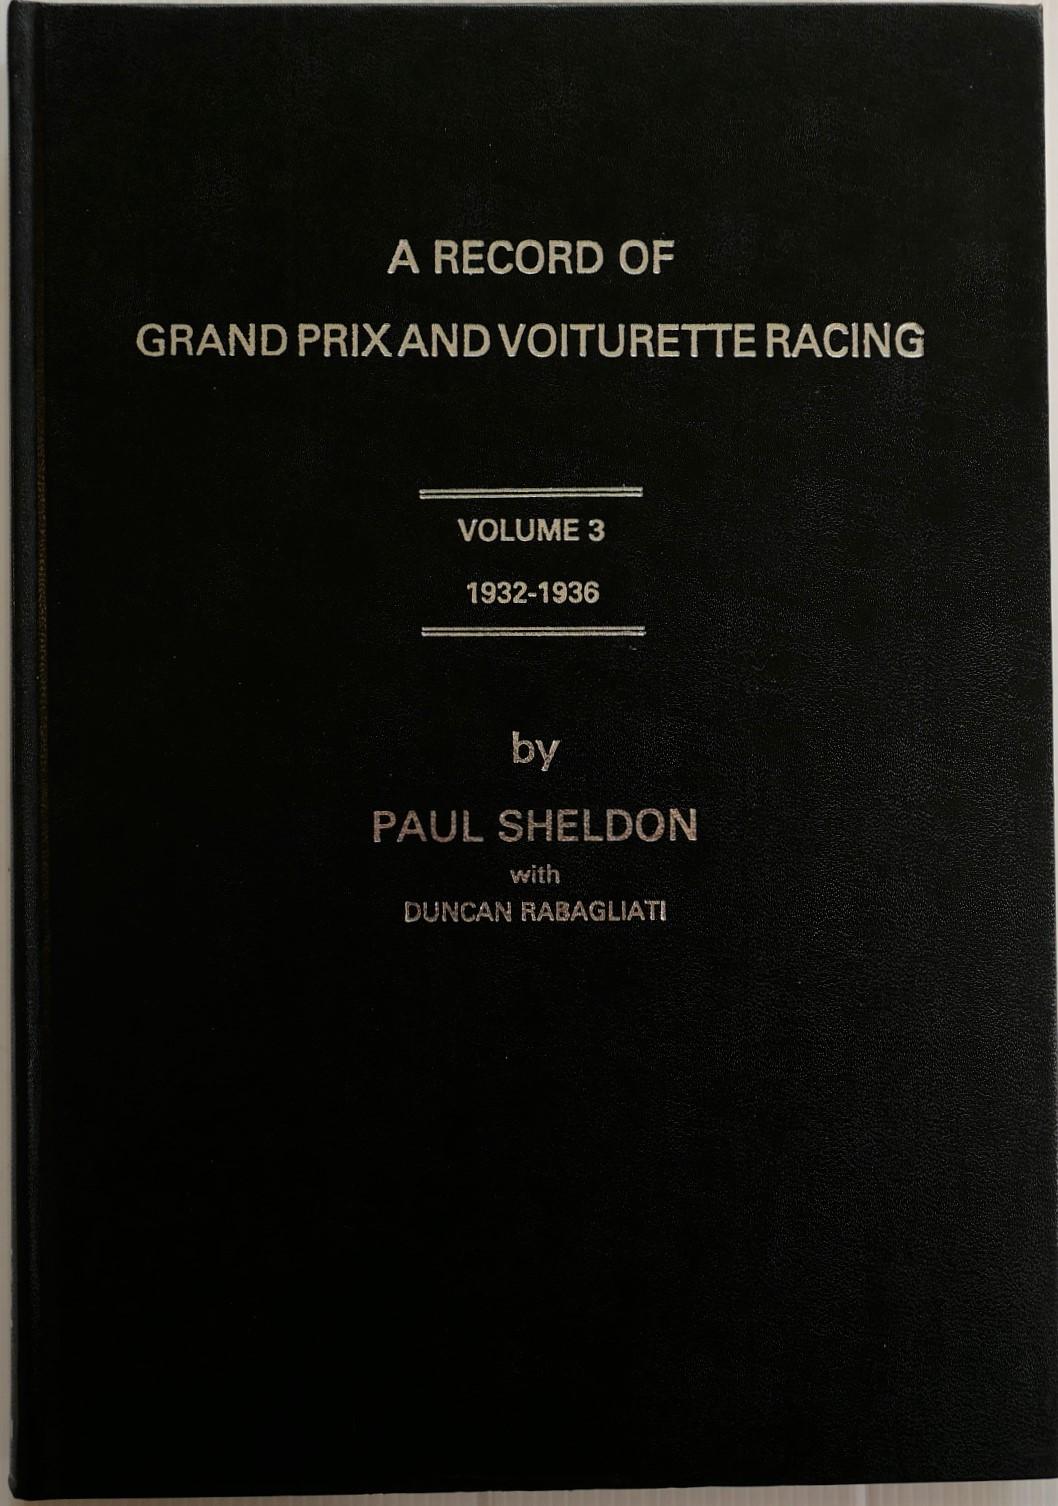 A Record of Grand Prix and Voiturette Racing Volume 3 1932-1936 [SIGNED] - Sheldon, Paul; de la Gorce, Yves and Rabagliatti, Duncan